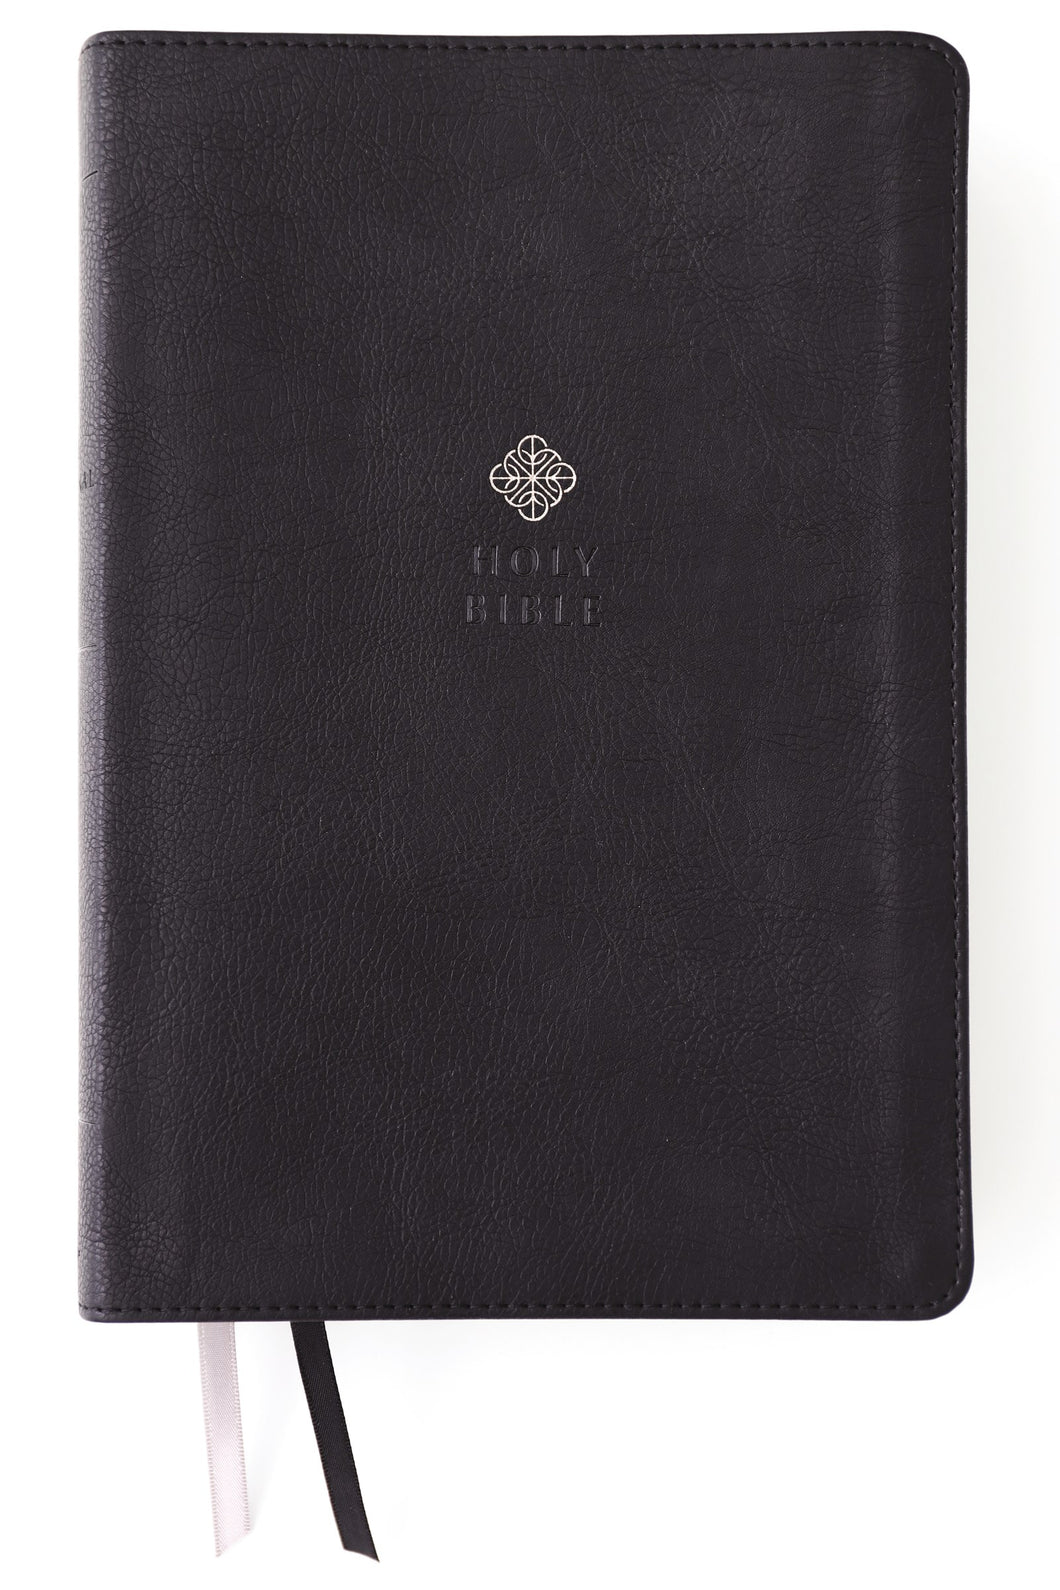 NIV Men's Devotional Bible/Large Print (Comfort Print)-Black Leathersoft